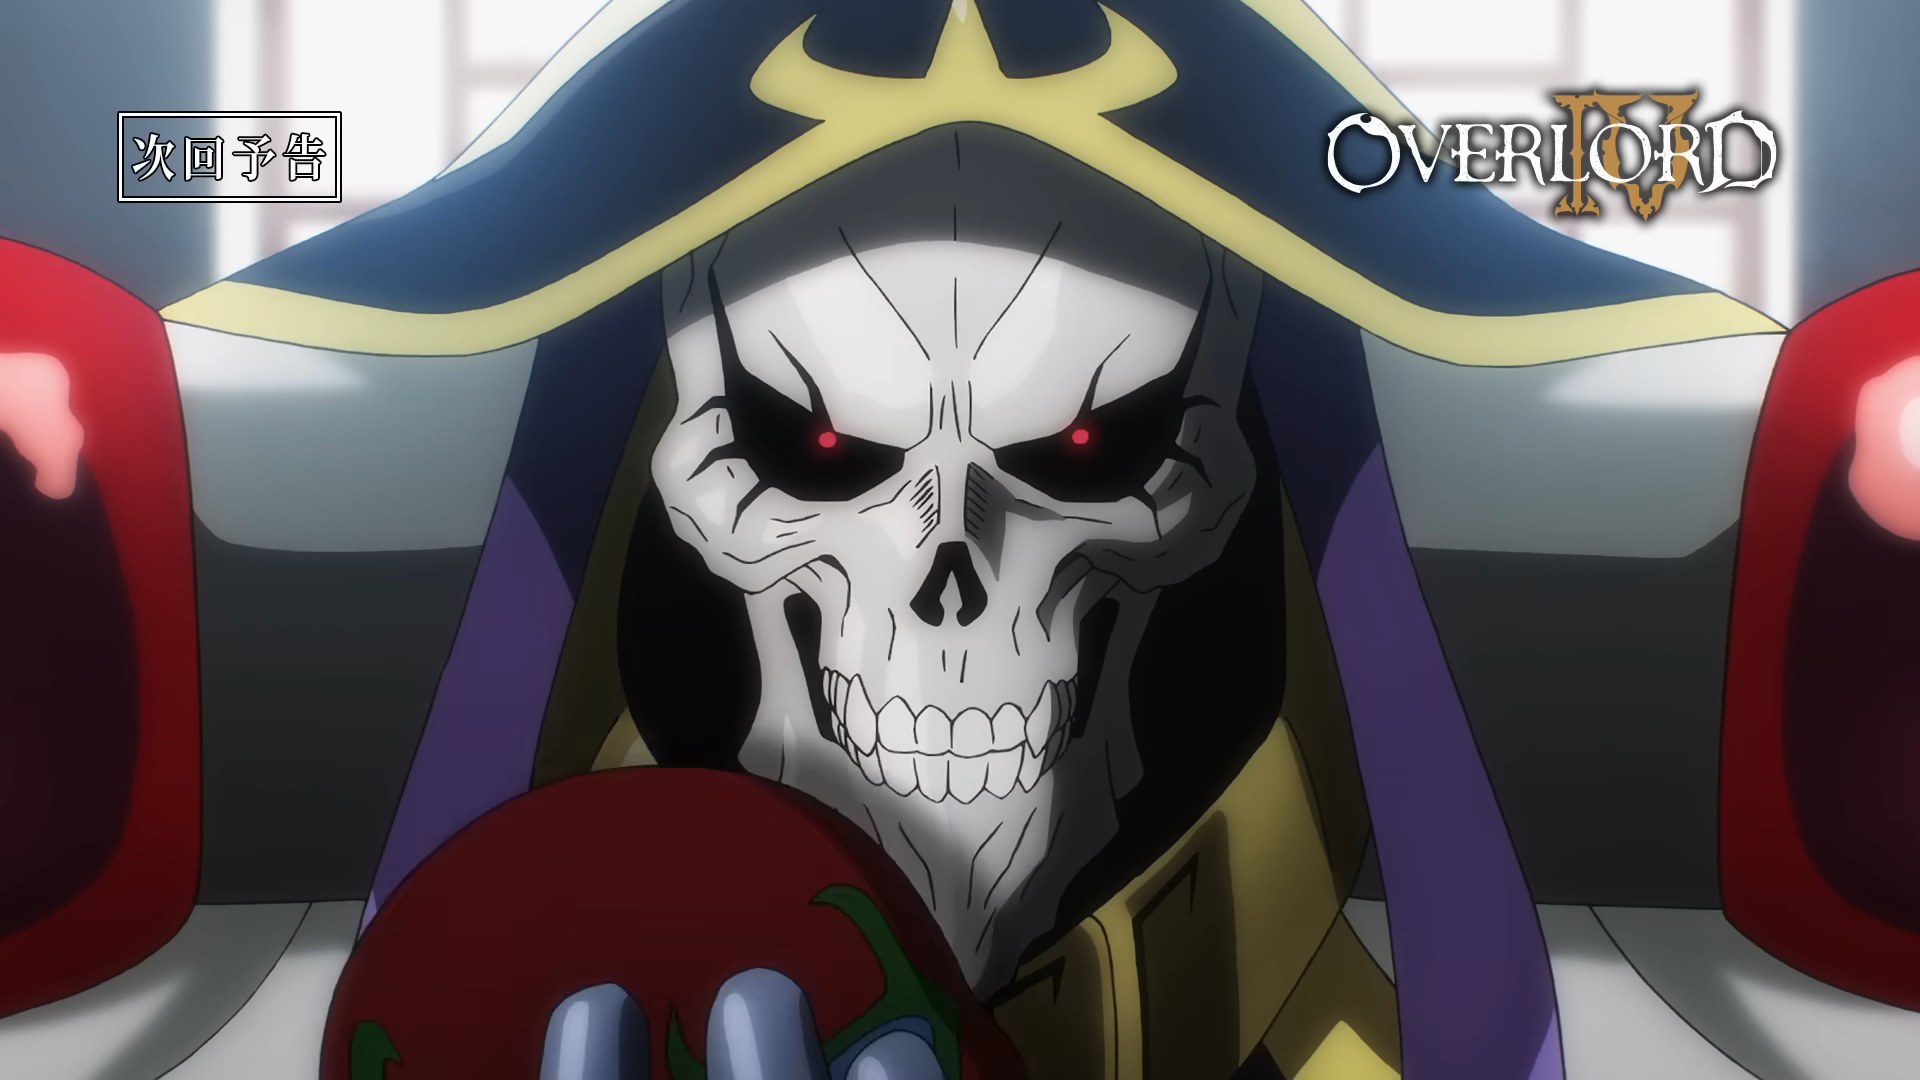 Assistir Overlord 4: Episódio 4 Online - Animes BR